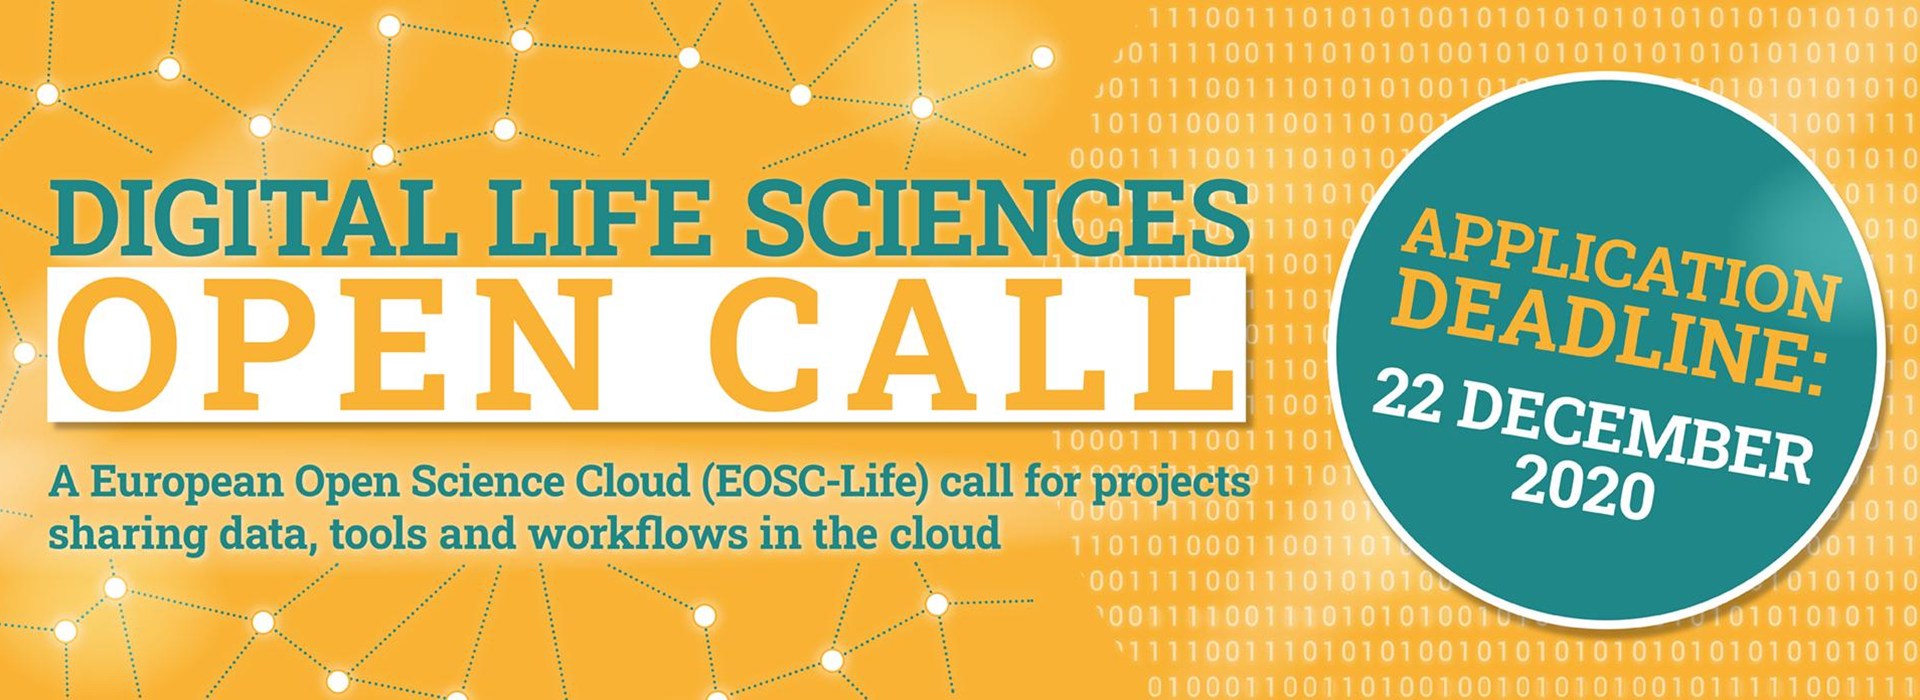 Digital Life Sciences Open Call - A European Open Science Cloud (EOSC-Life)